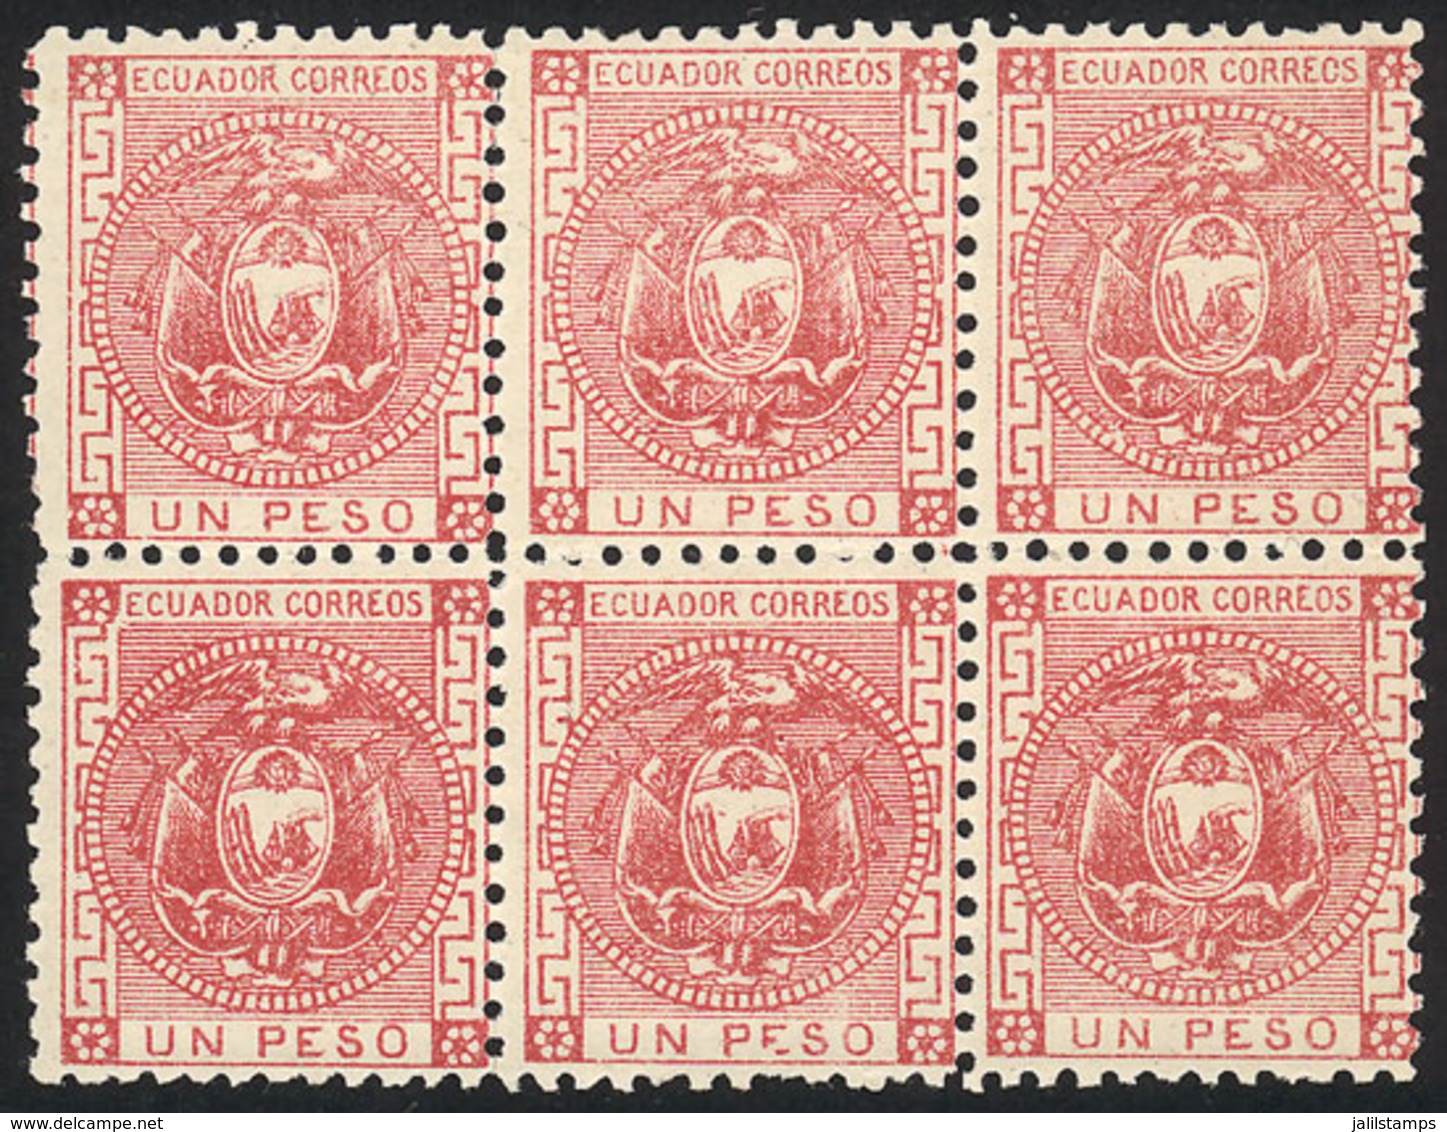 ECUADOR: Sc.11, 1872 1P. Rose, Beautiful Block Of 6, MNH (2 Stamps Very Lightly Hinged), Excellent Quality! - Ecuador